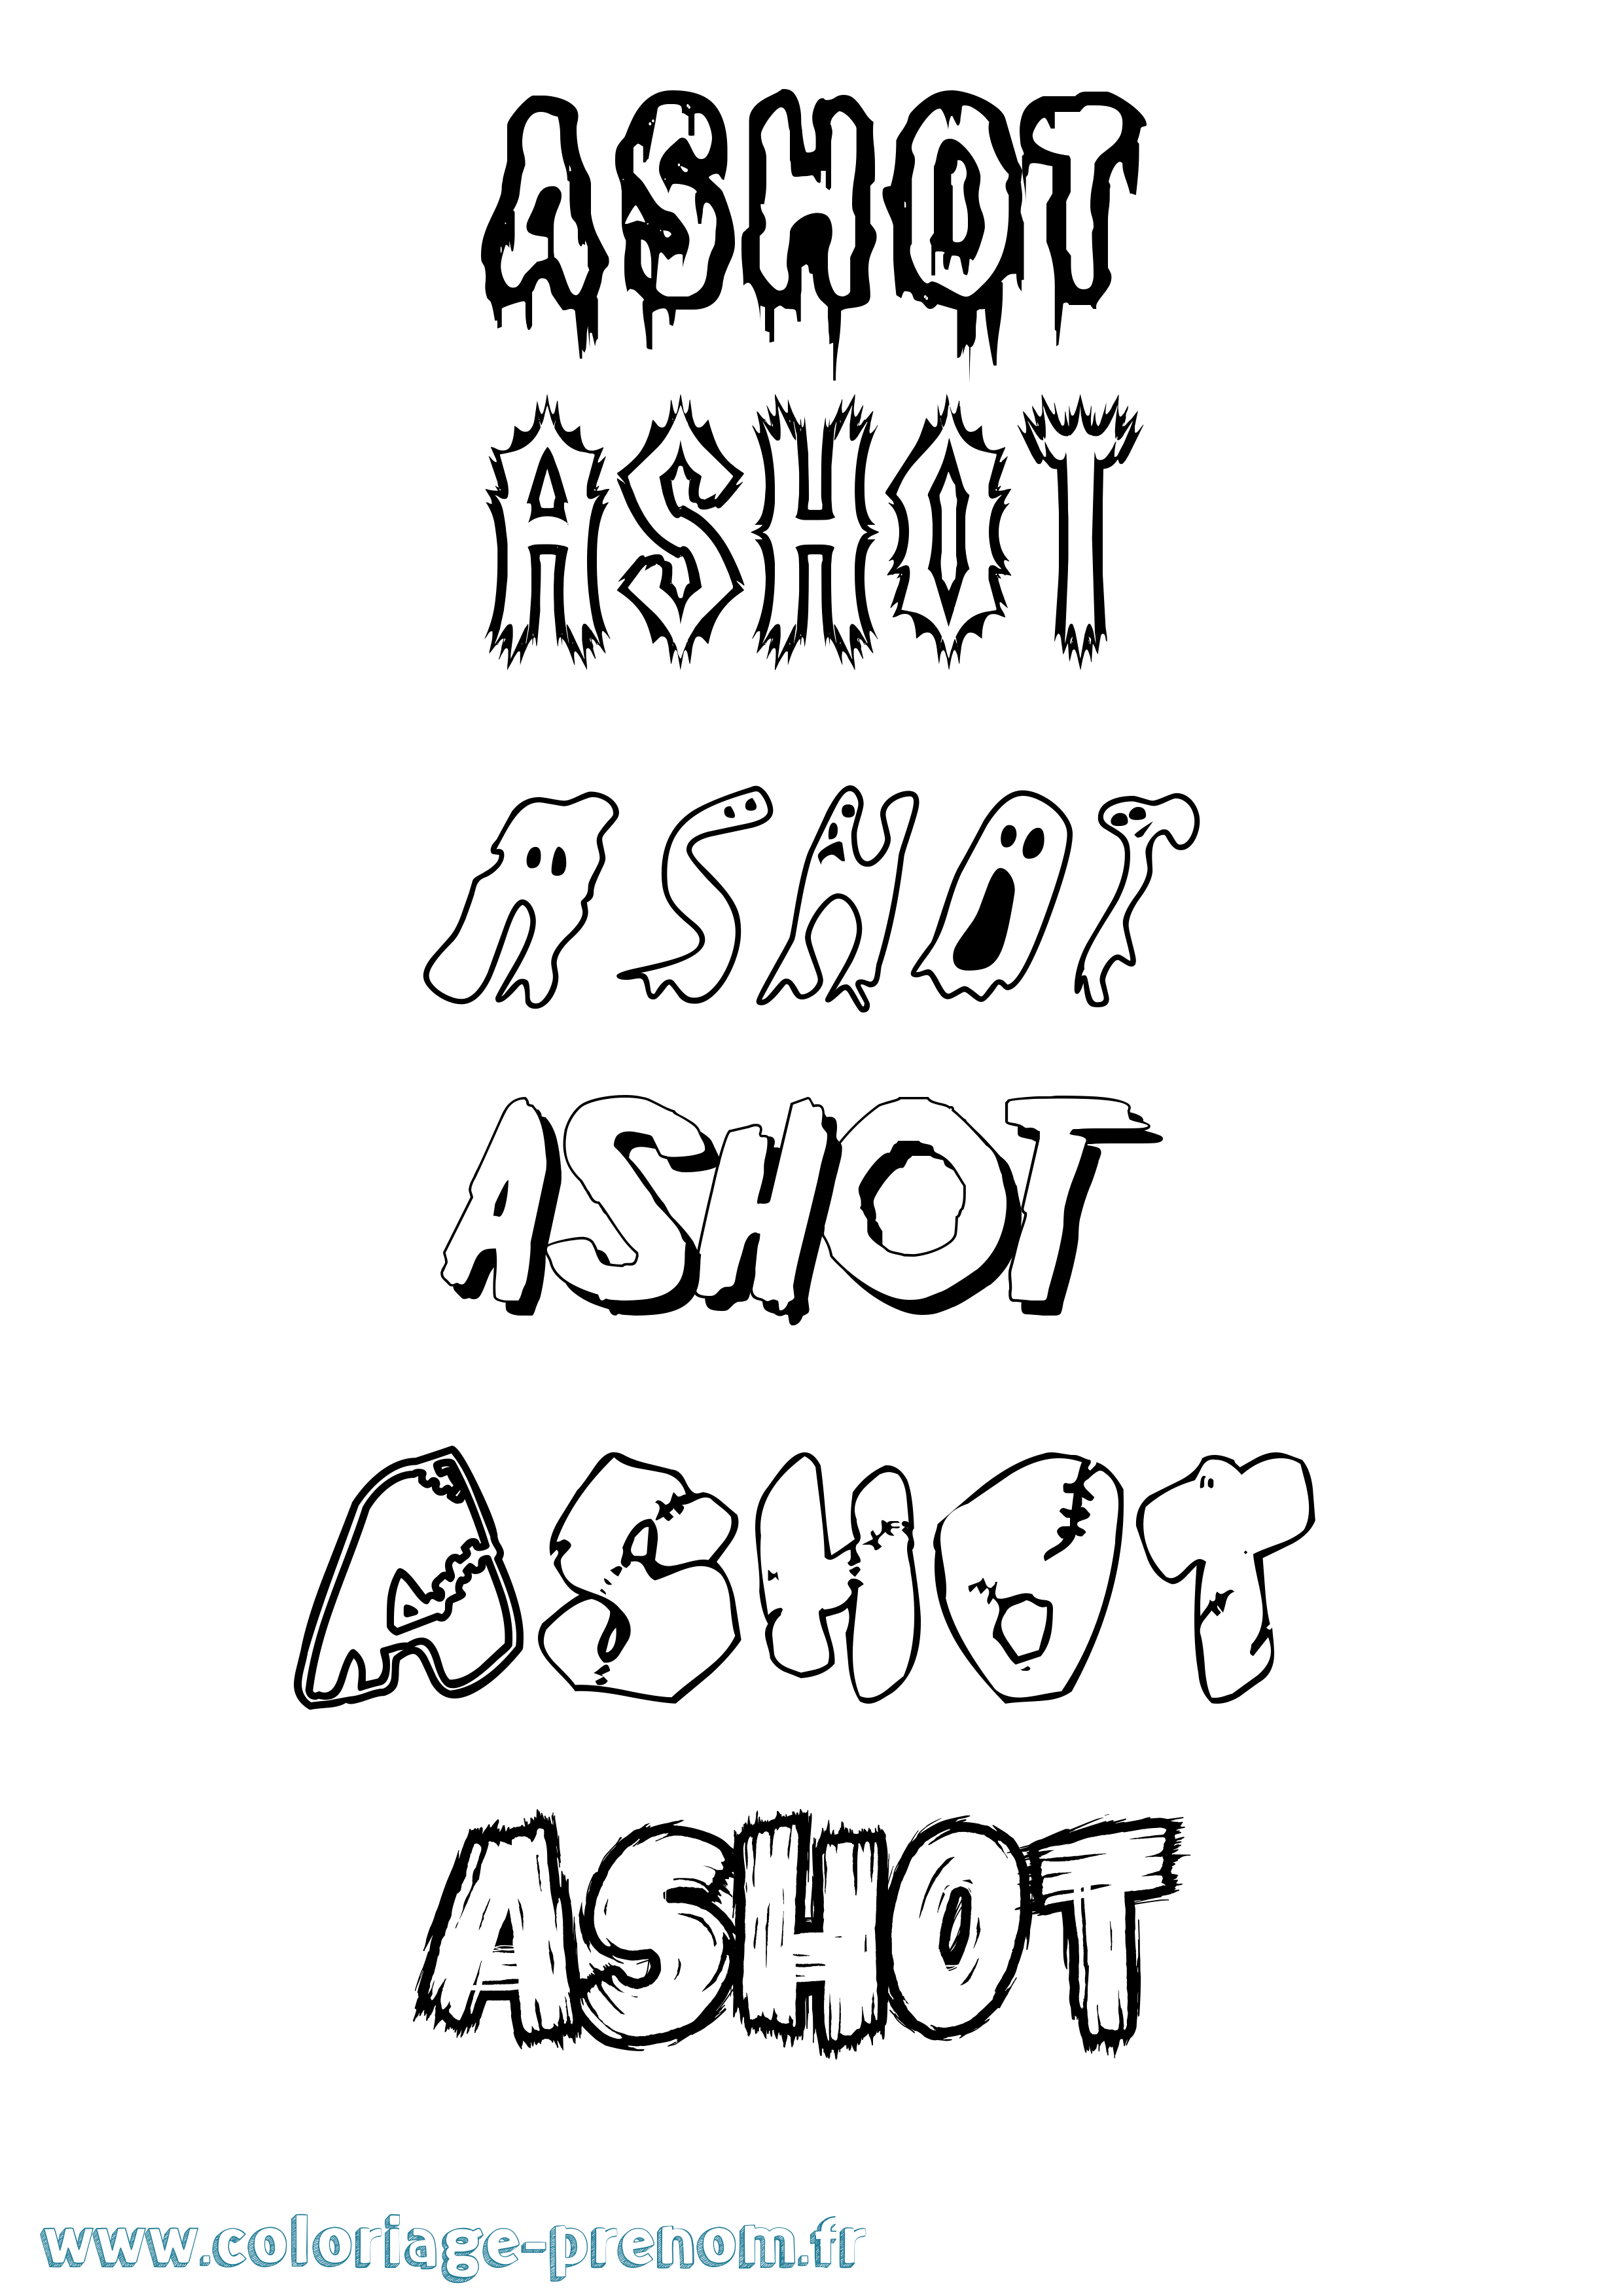 Coloriage prénom Ashot Frisson